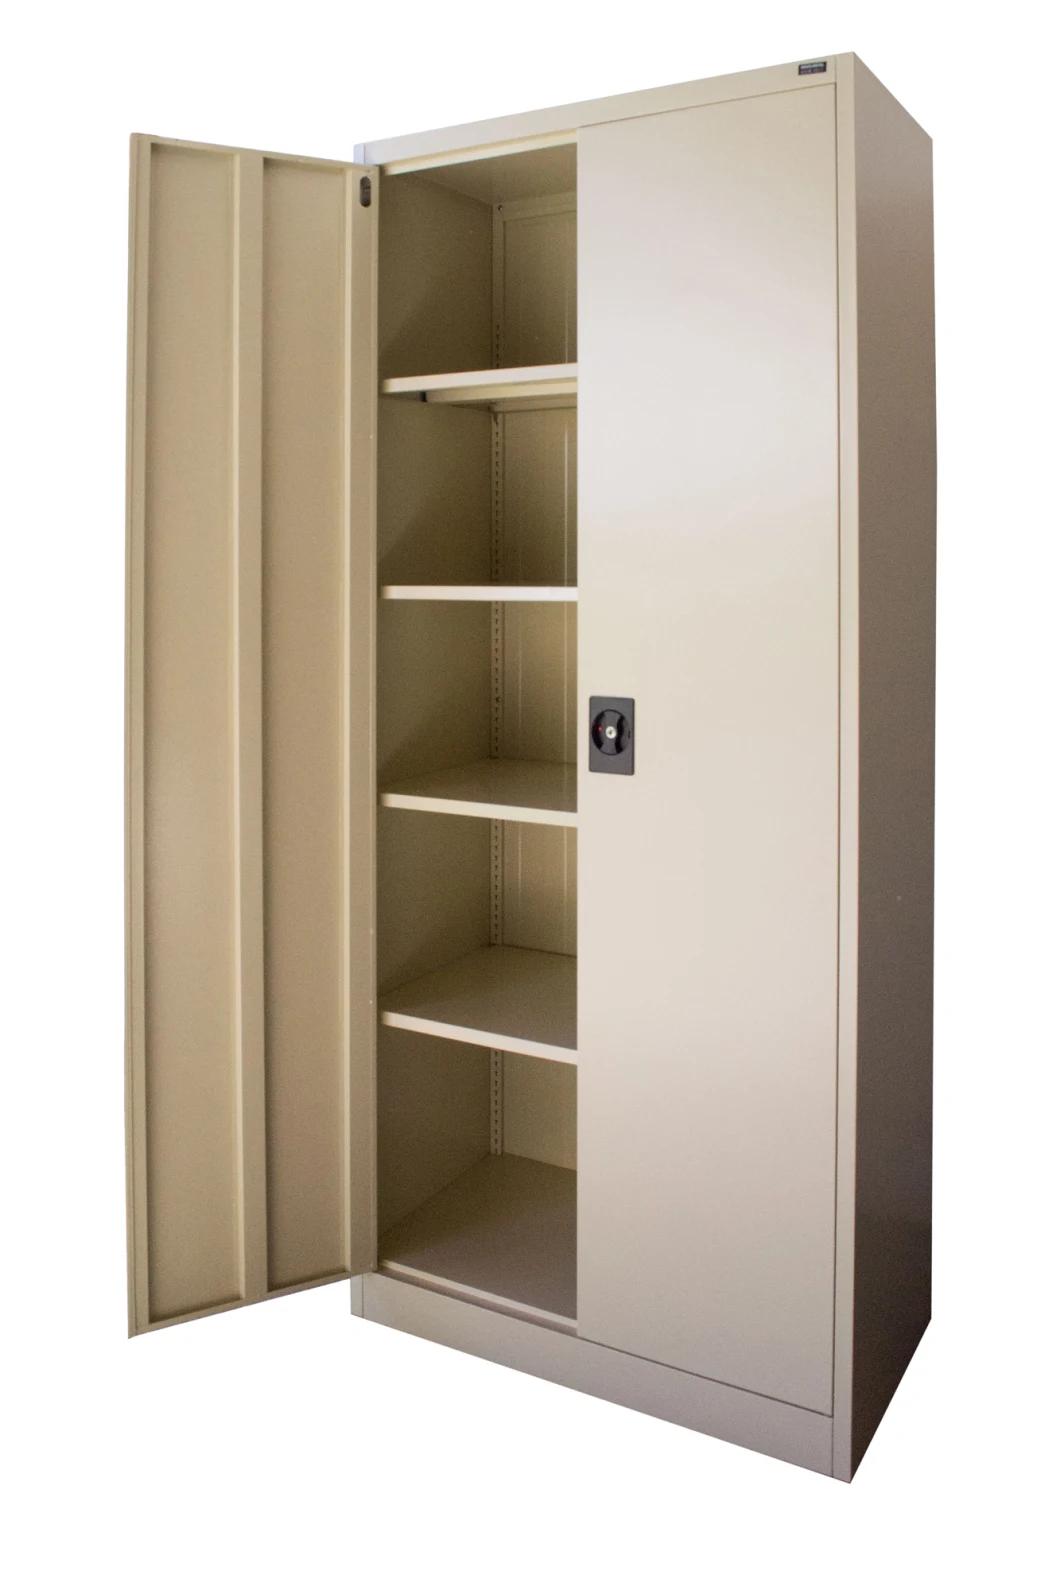 Jas-008 Office Furniture Metal Two 2 Swing Door Steel Filing Cabinet Office Storage Cabinet